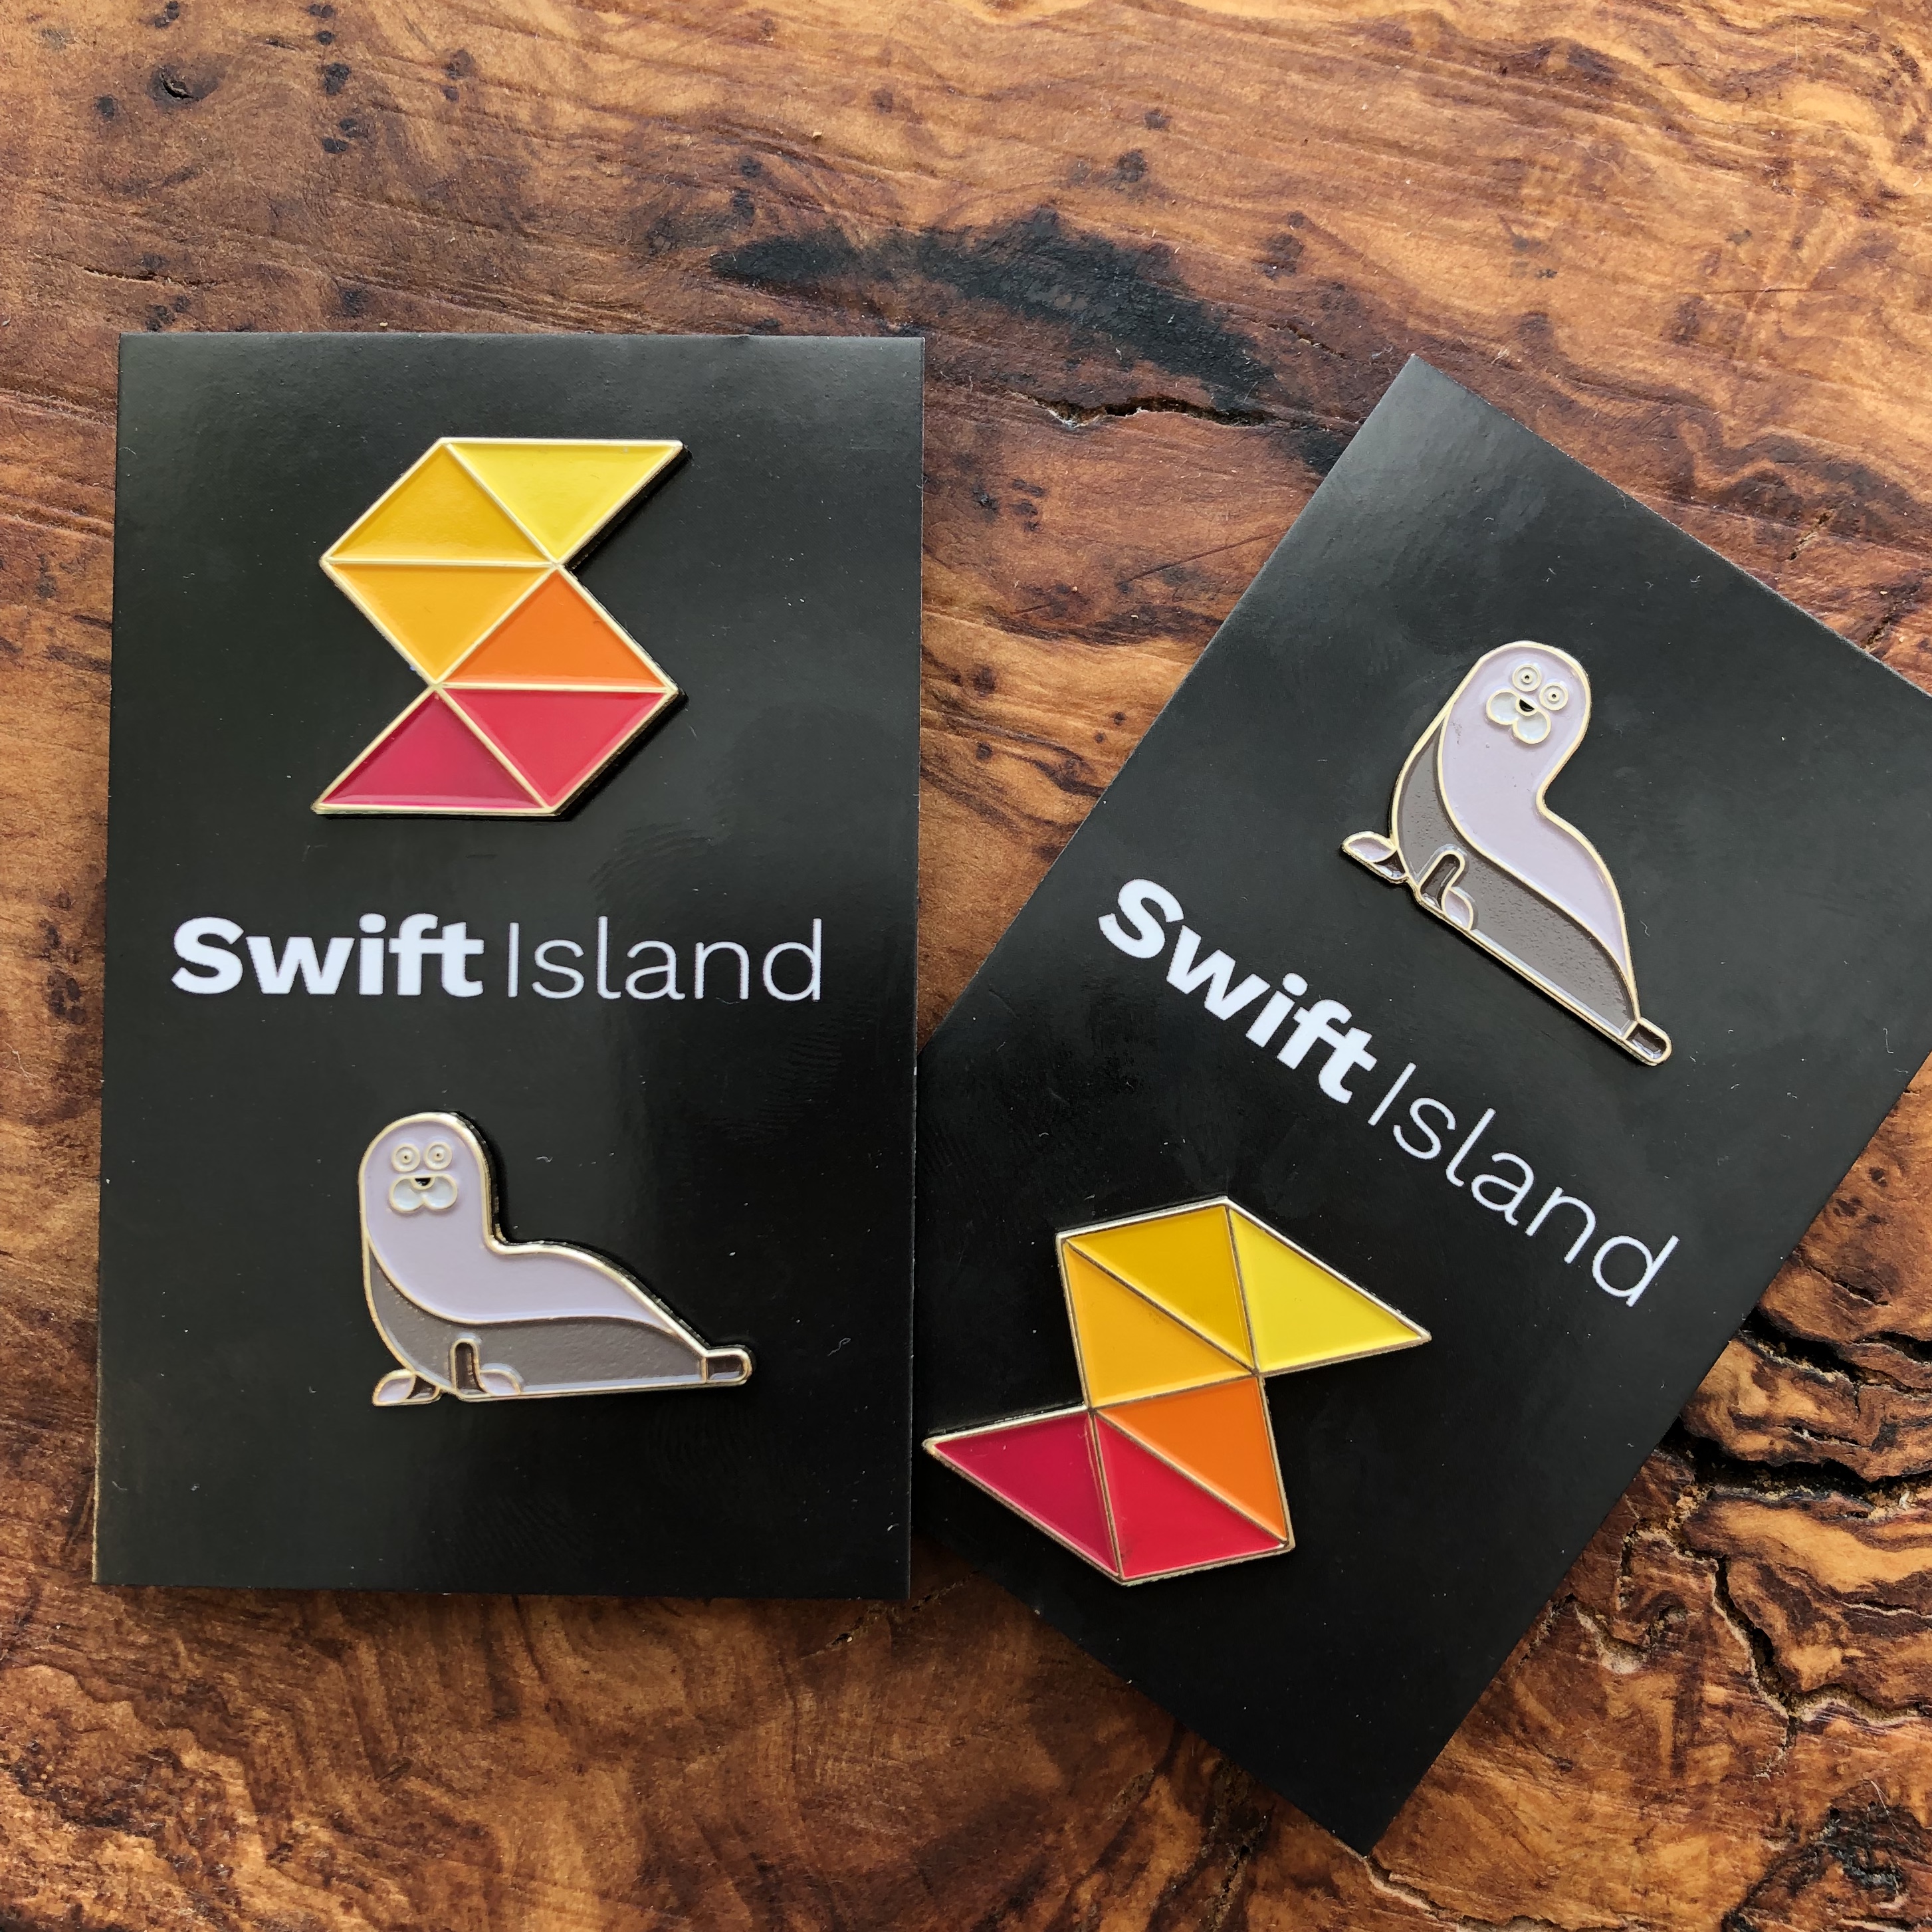 Swift Island pins